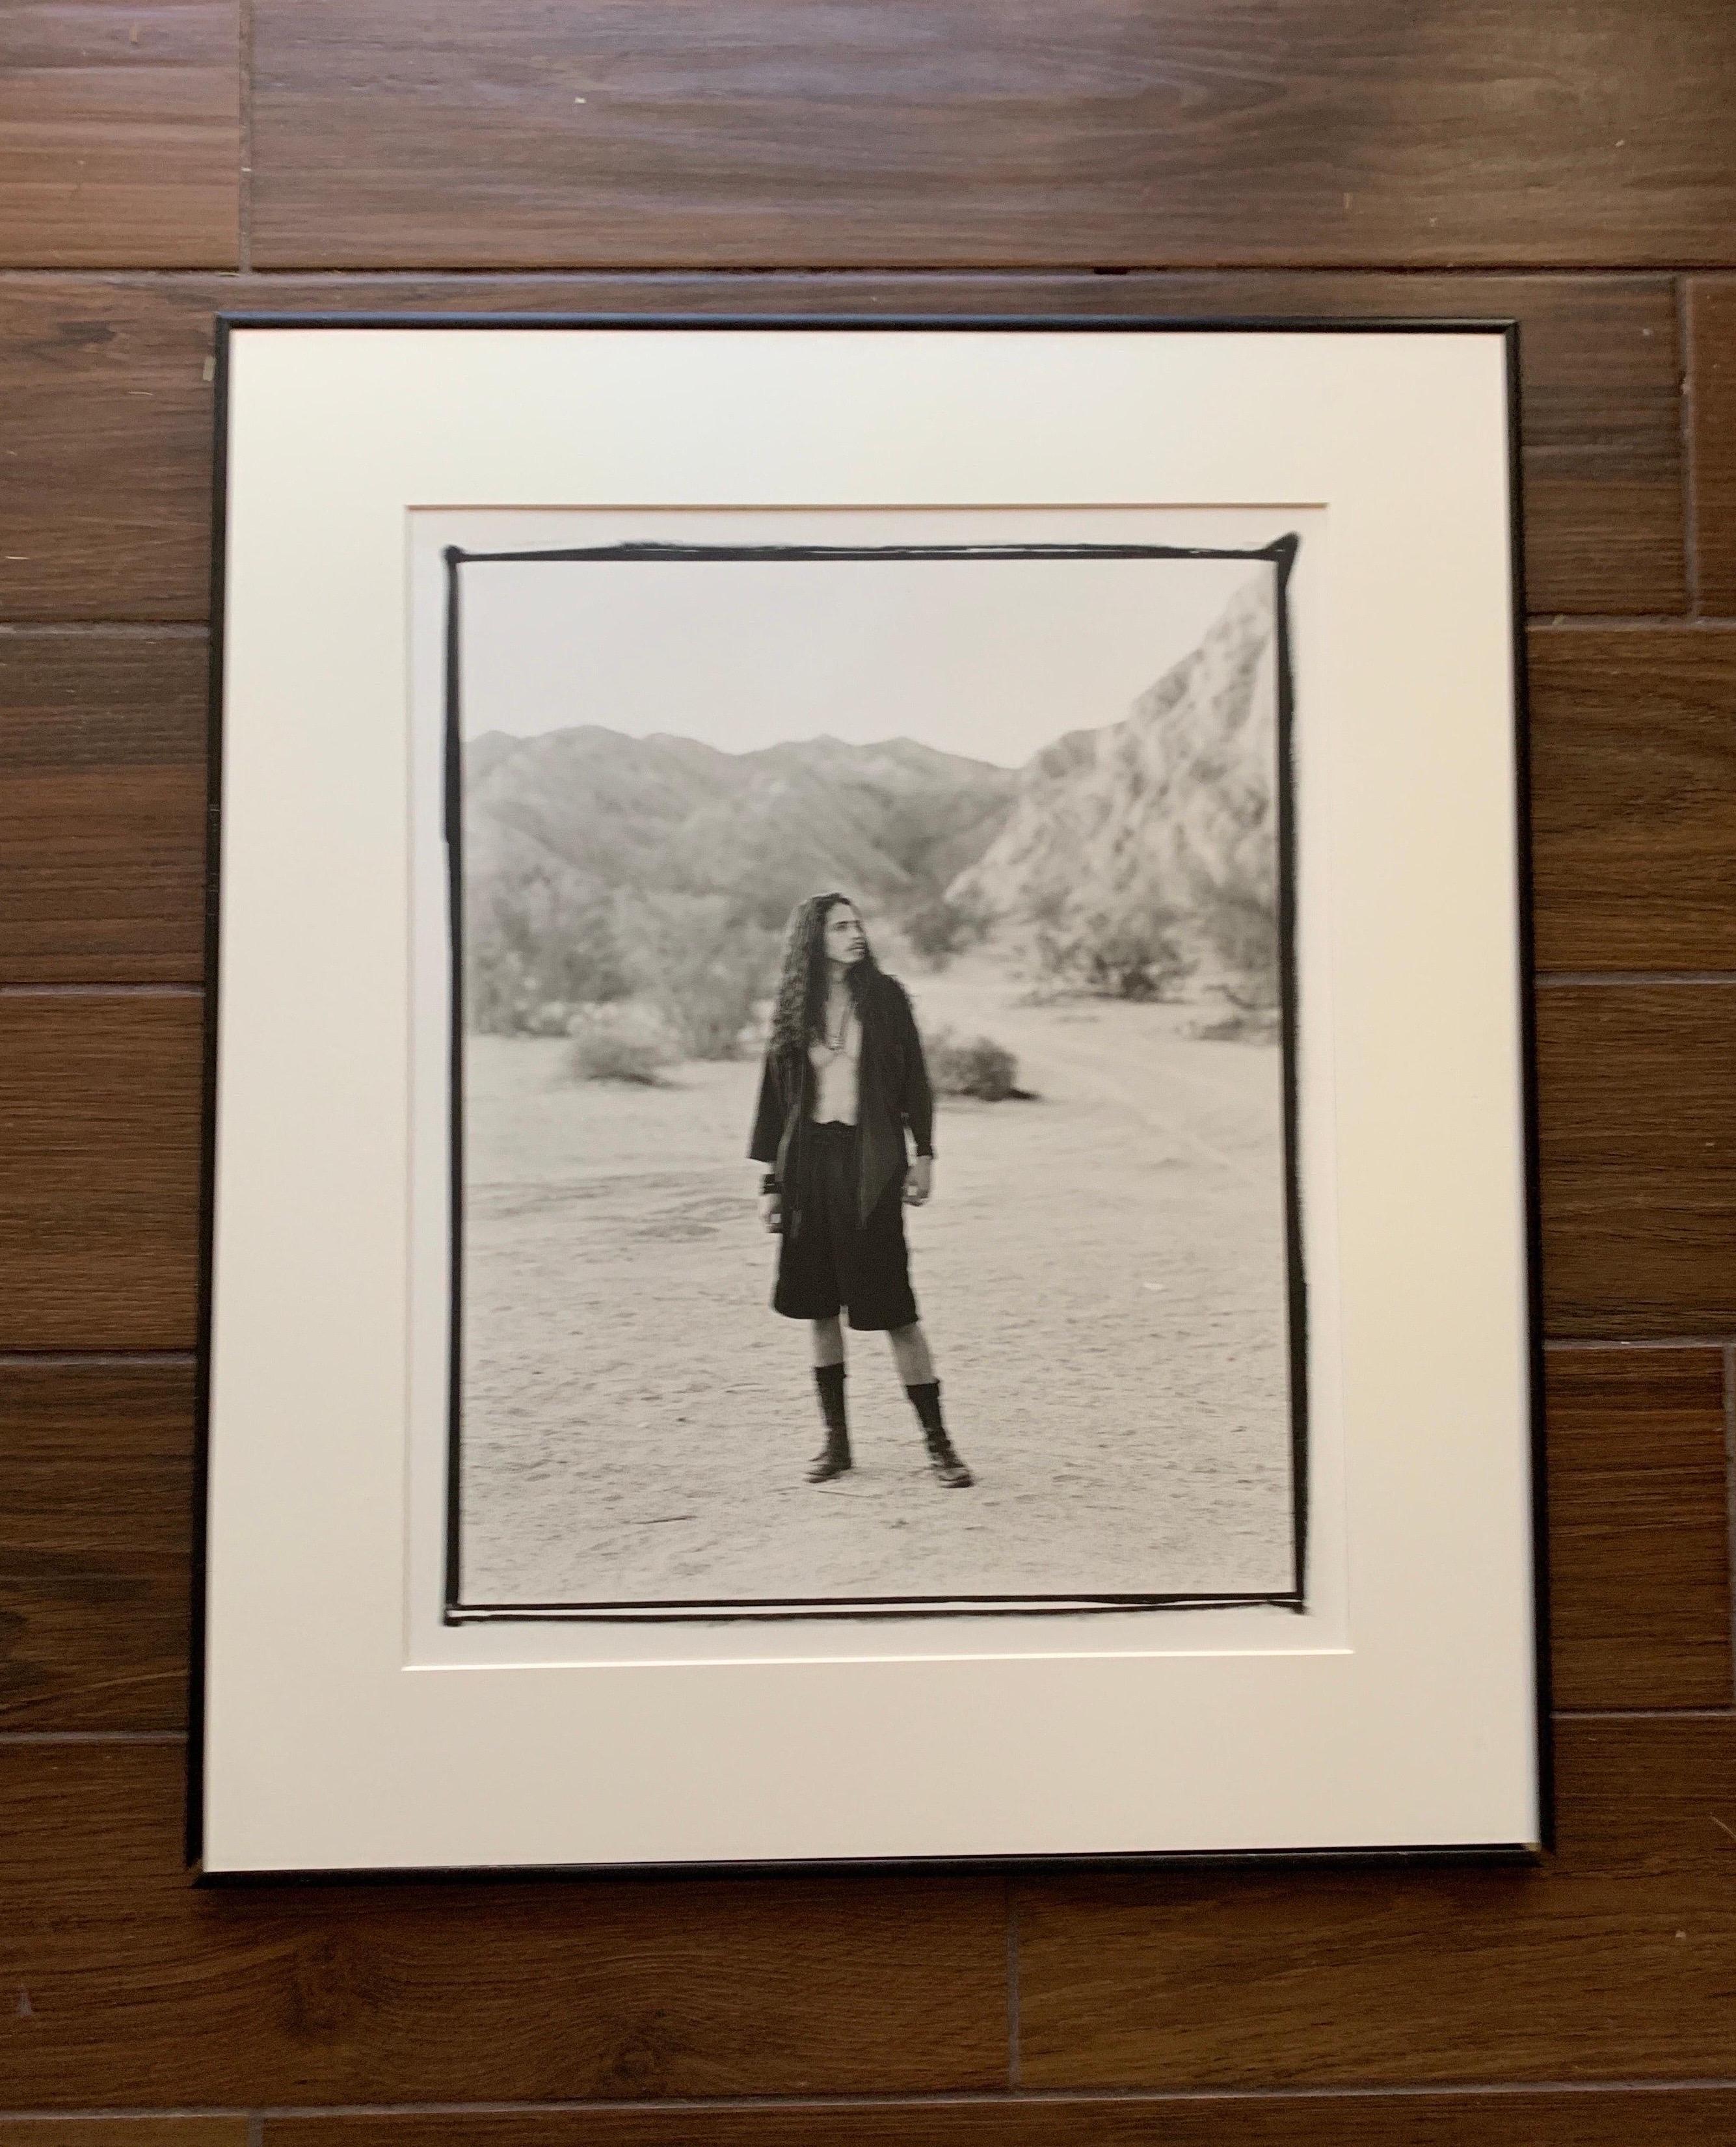 Hand-Crafted Chris Cornell “Portrait in Desert” Original Silver B&W Photograph by C. Cuffaro